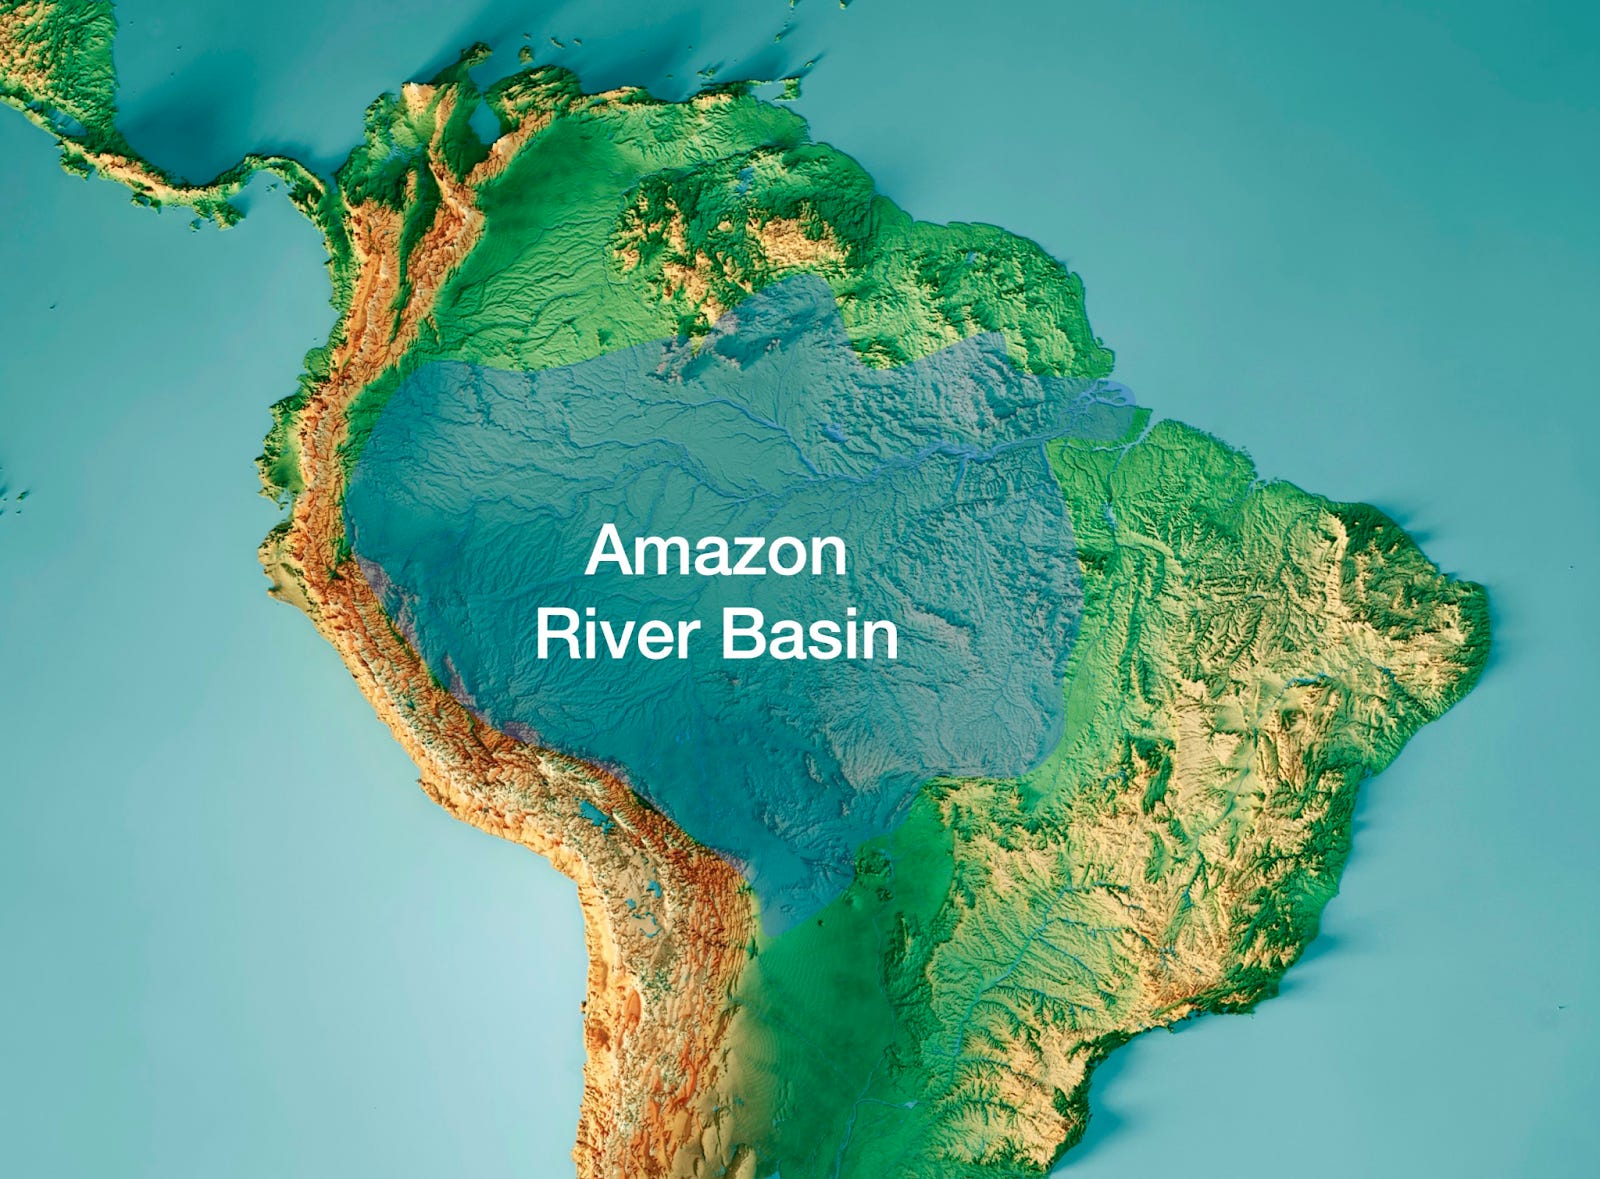 The Amazon Rainforest by Tomas Pueyo